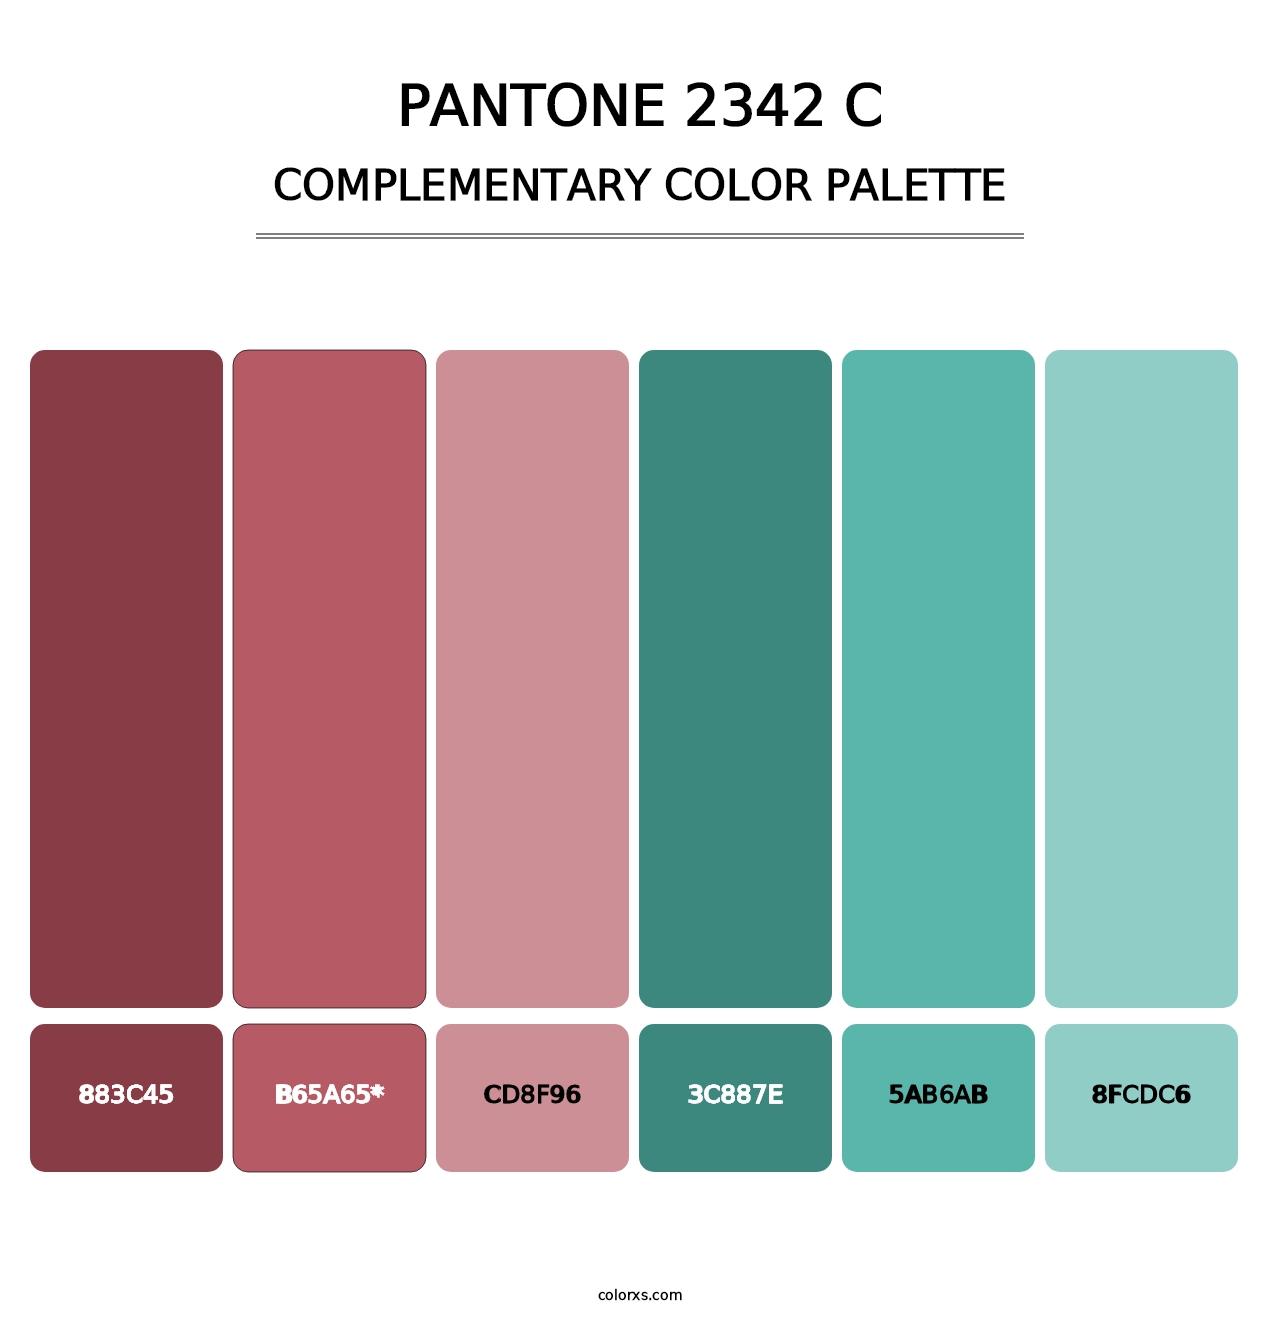 PANTONE 2342 C - Complementary Color Palette